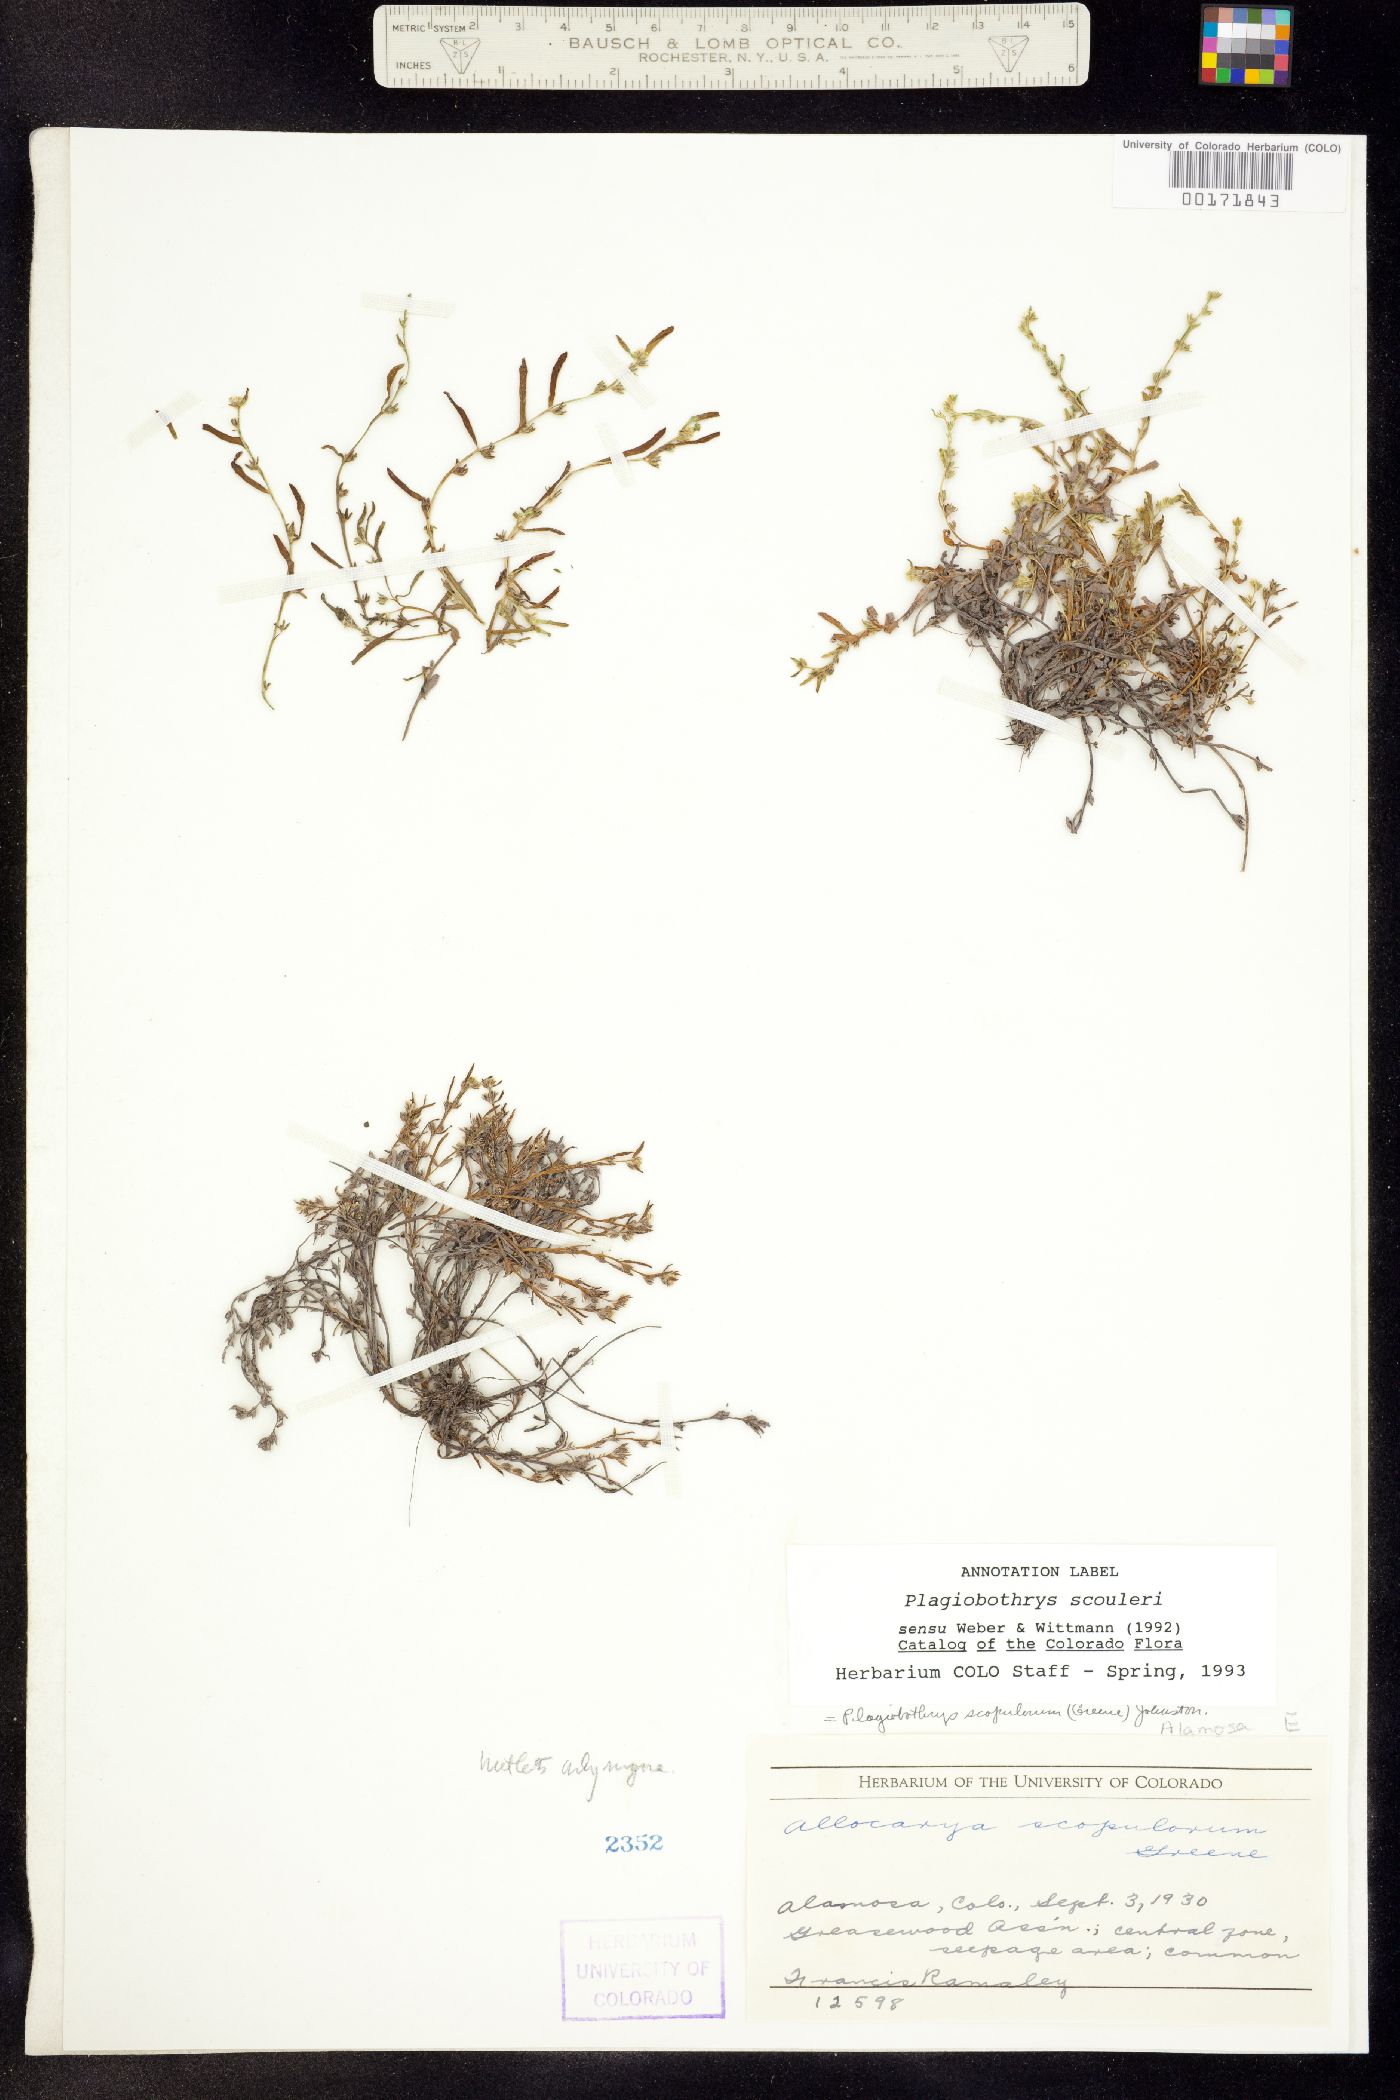 Plagiobothrys scouleri ssp. penicillata image